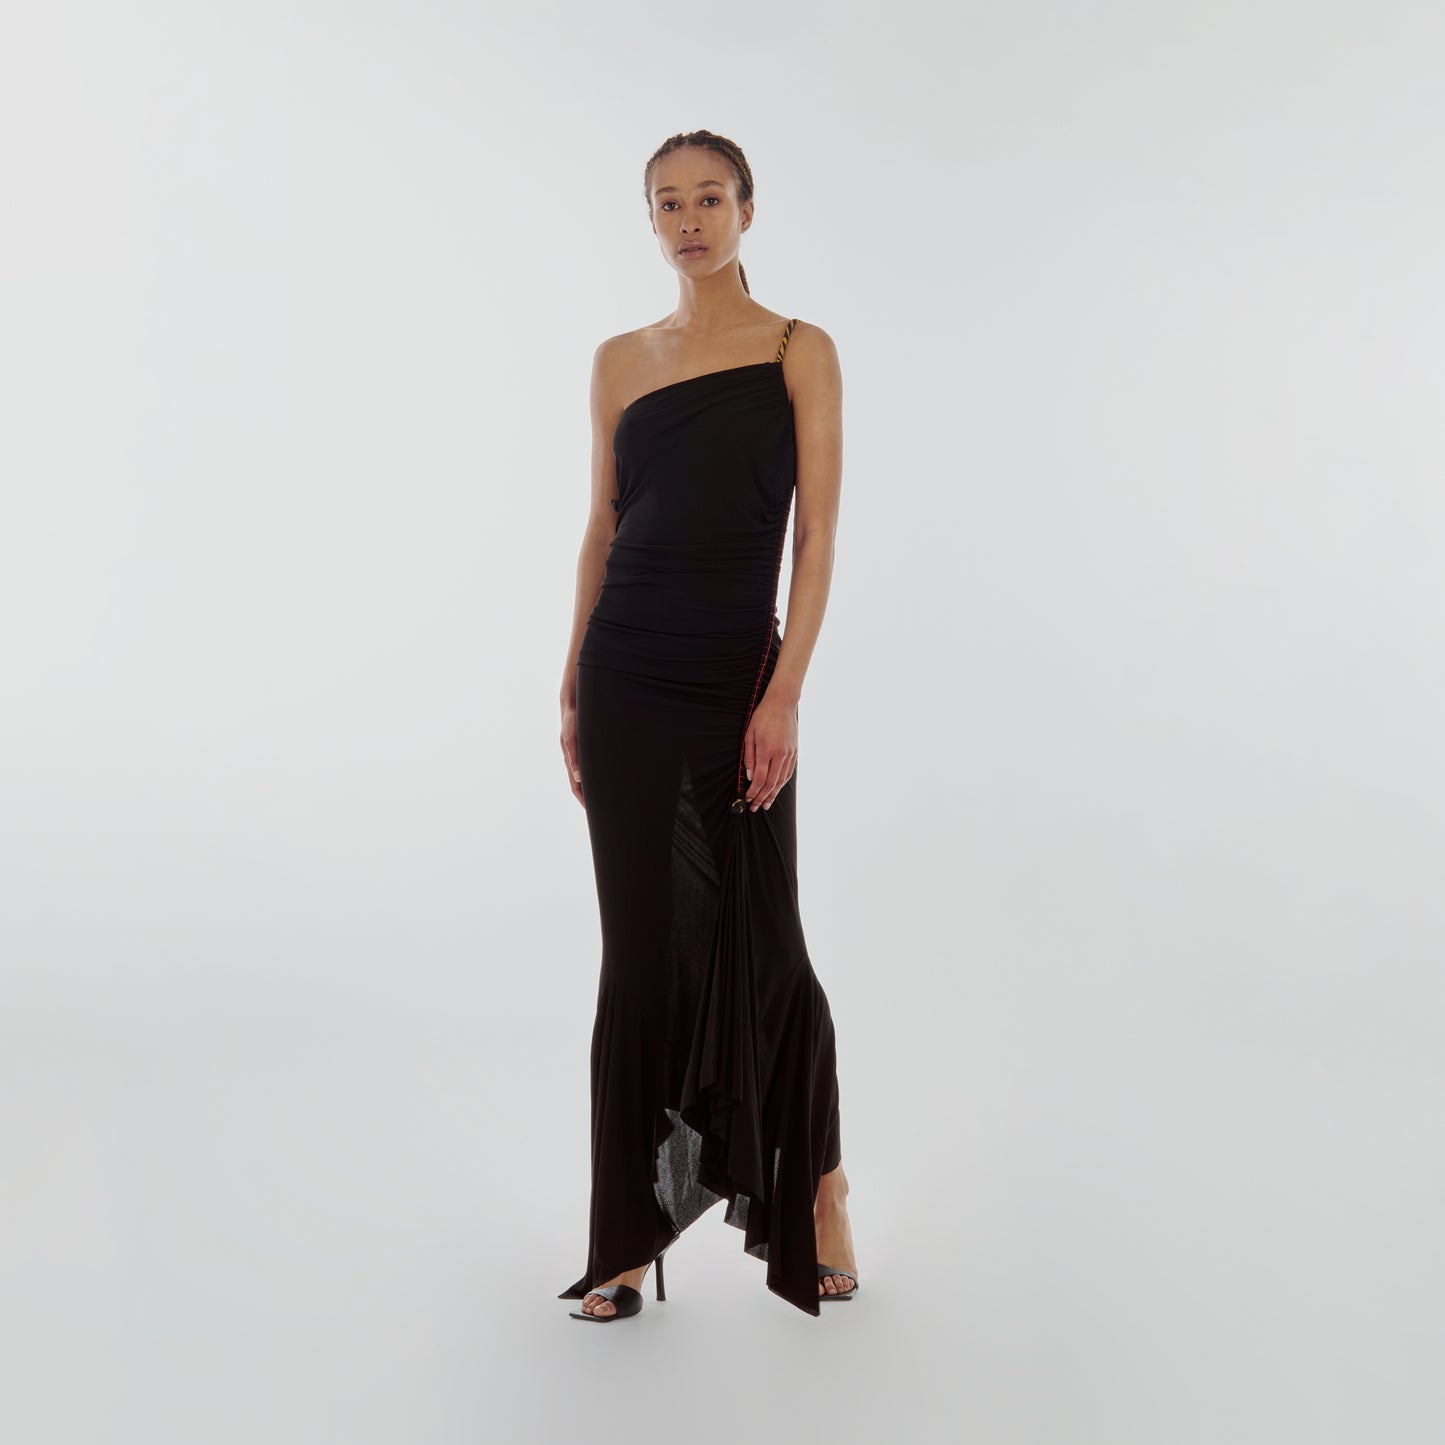 Astral Dress in black | Lara Chamandi